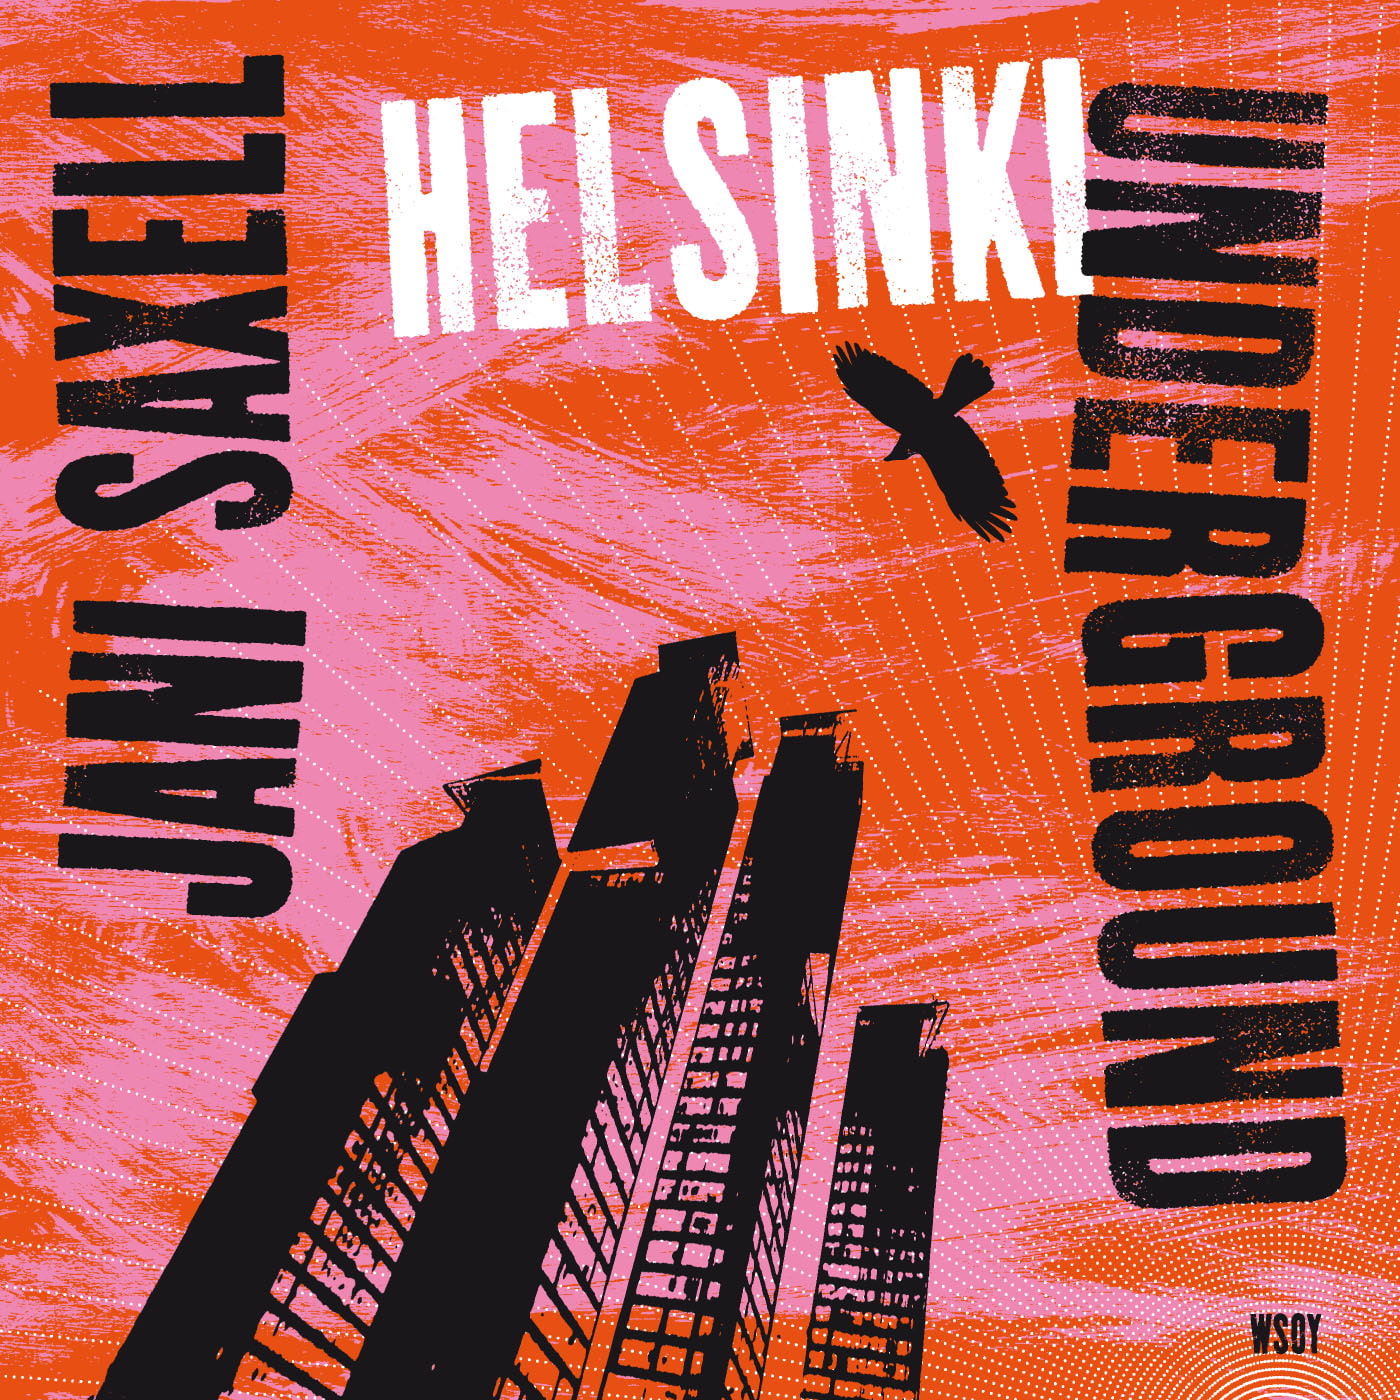 Helsinki underground